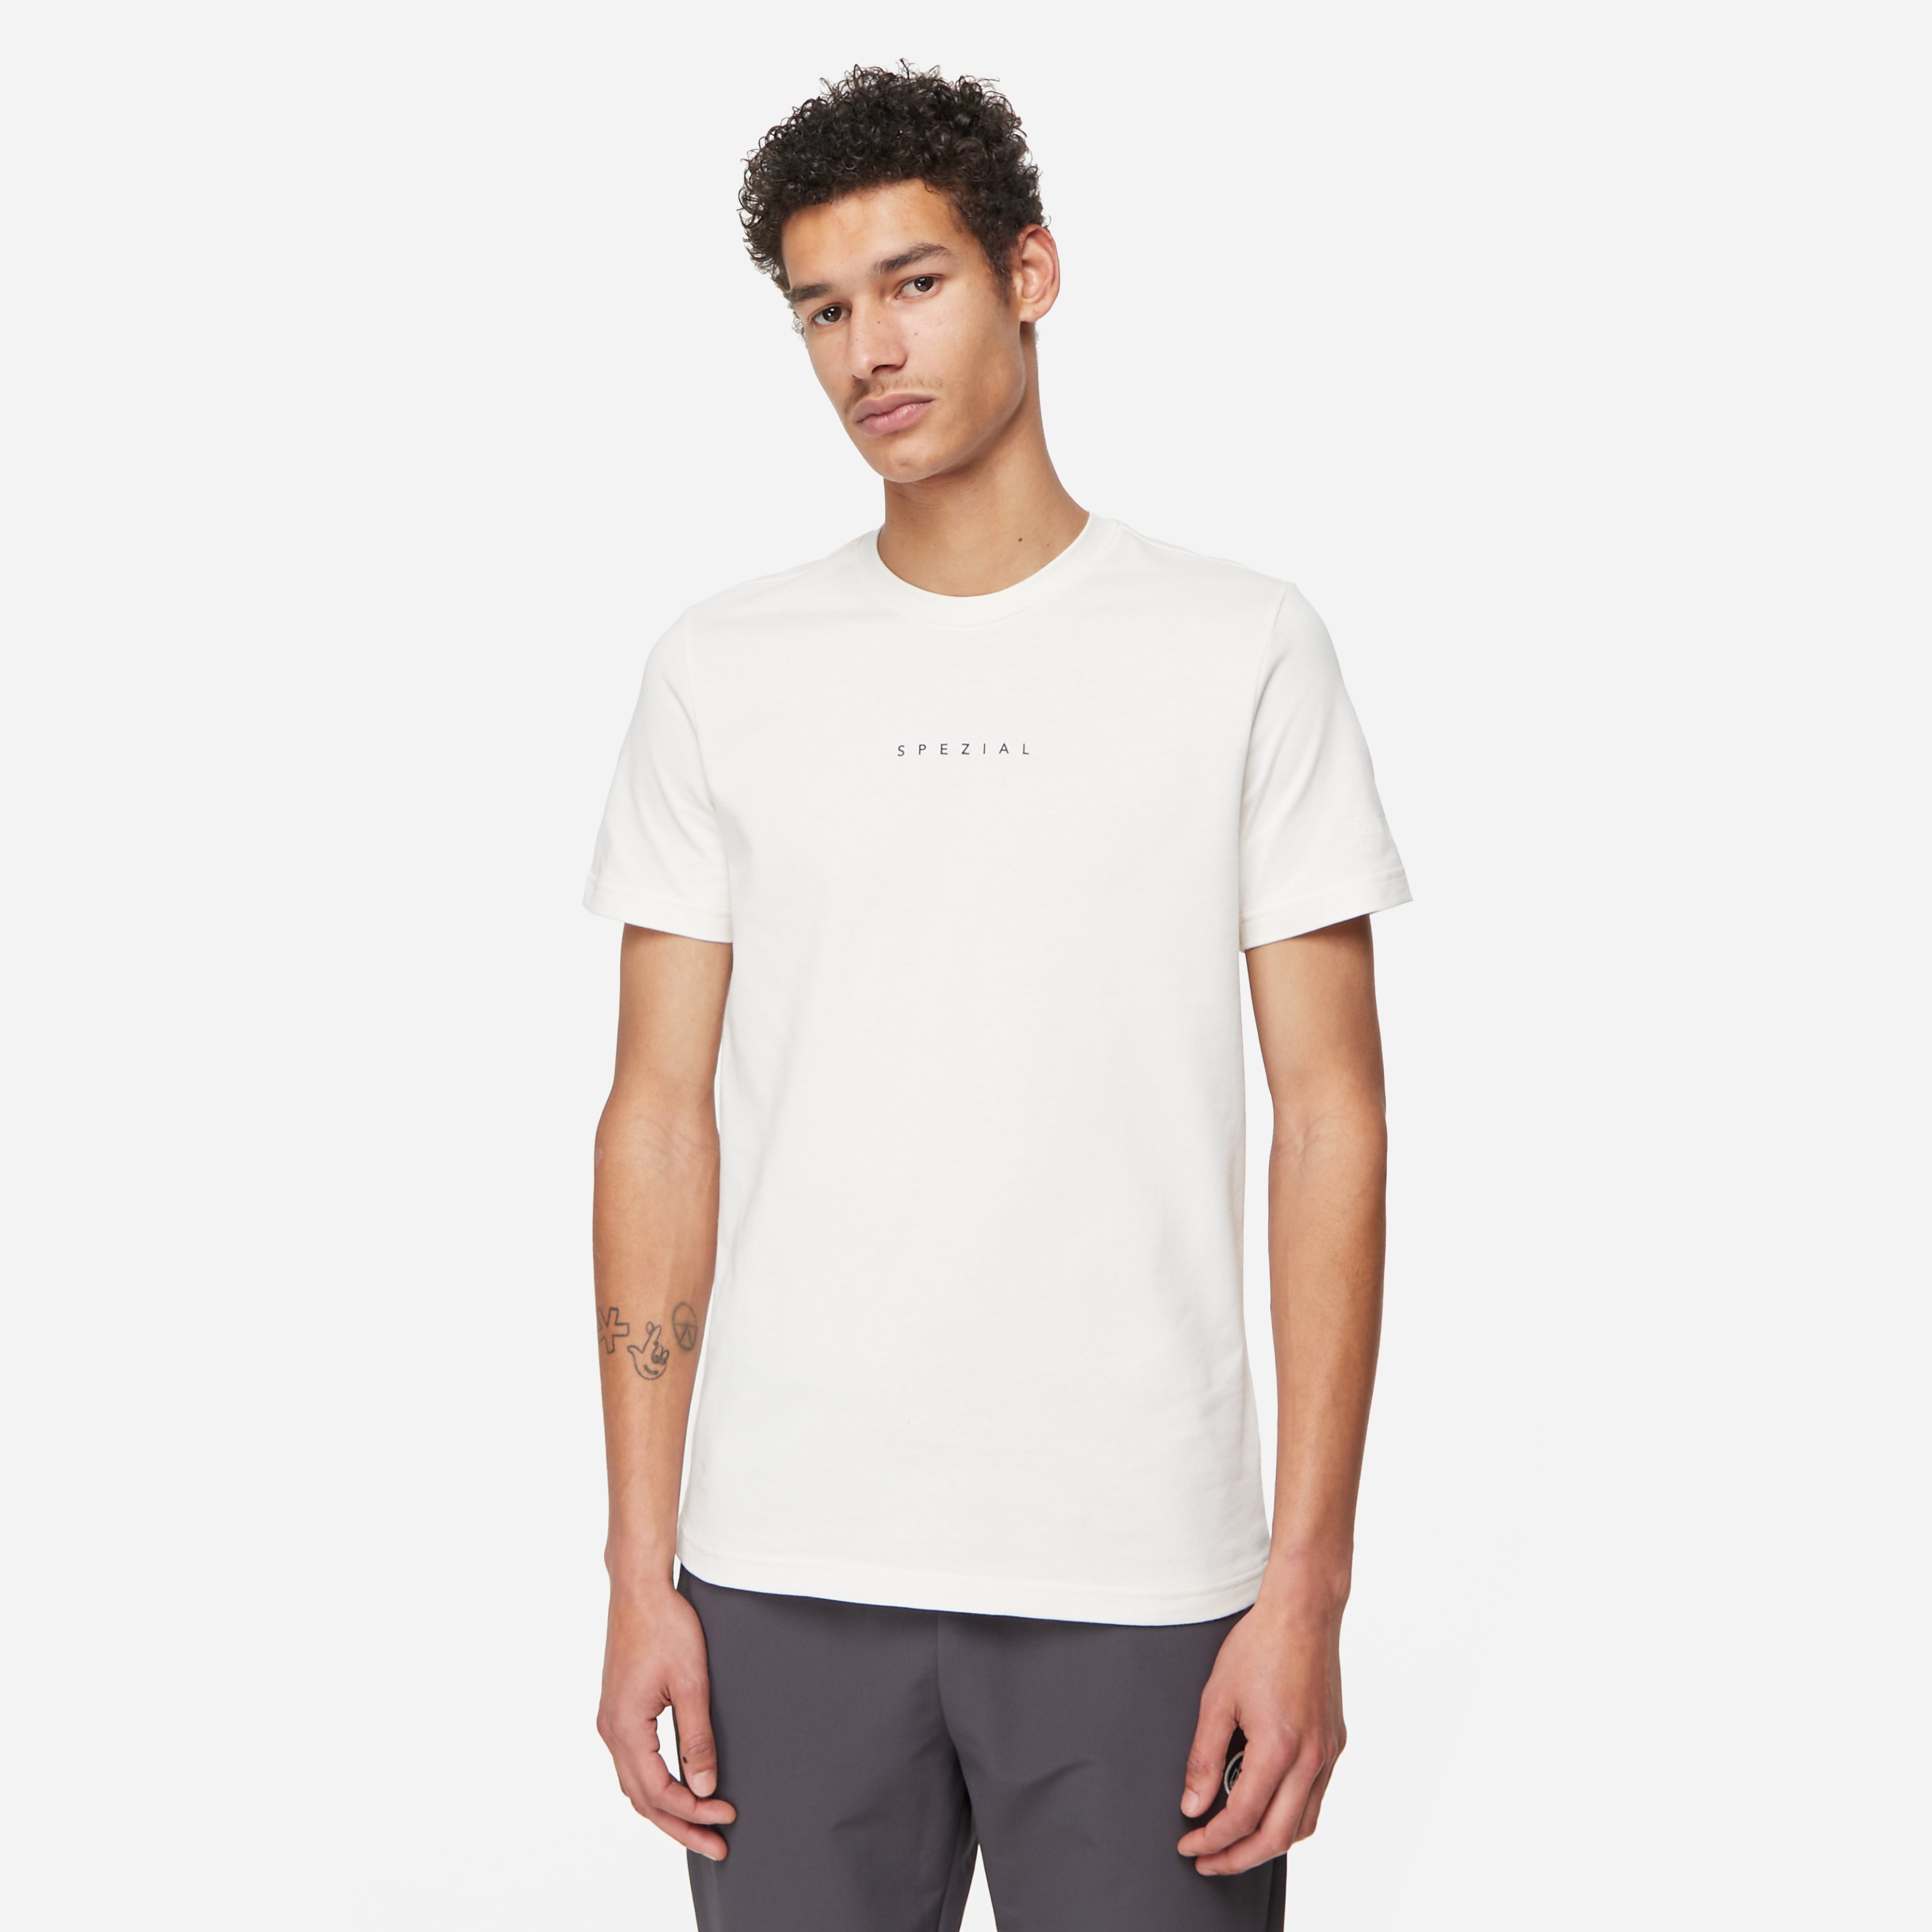 adidas SPEZIAL Graphic T-Shirt, White